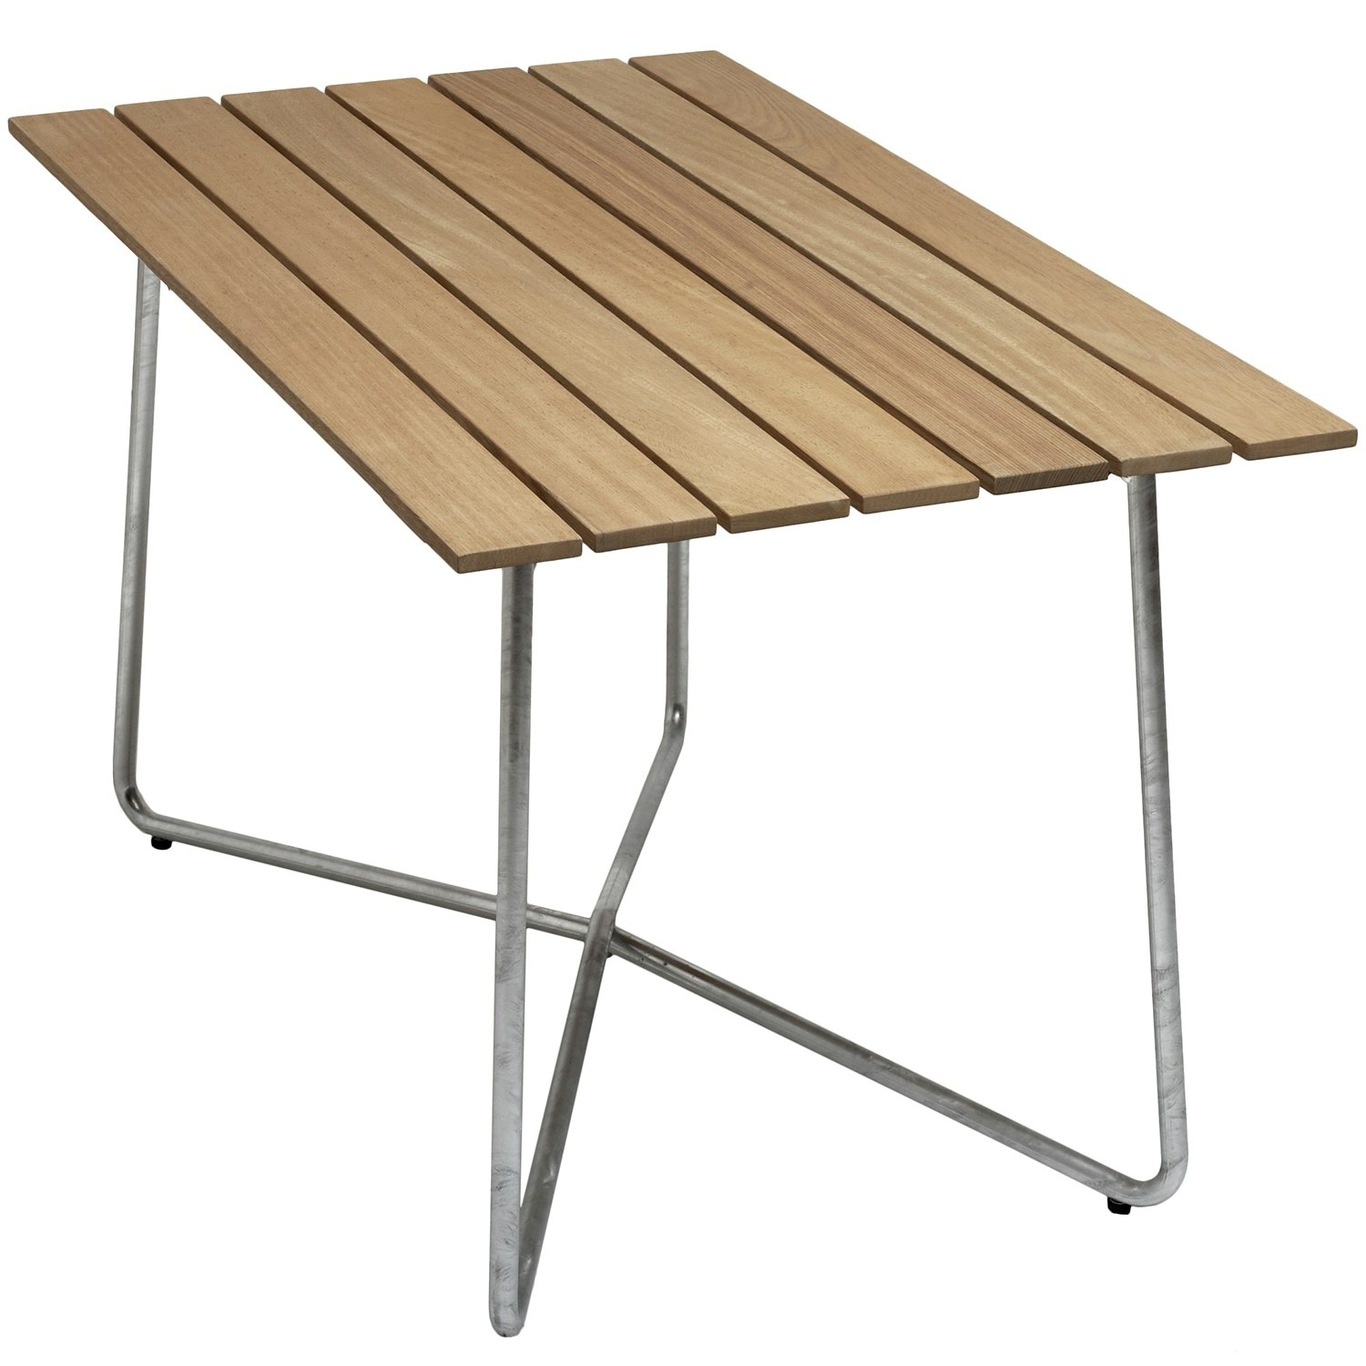 B25A Table 70x120 cm, Oiled Oak / Hot Galvanized Steel